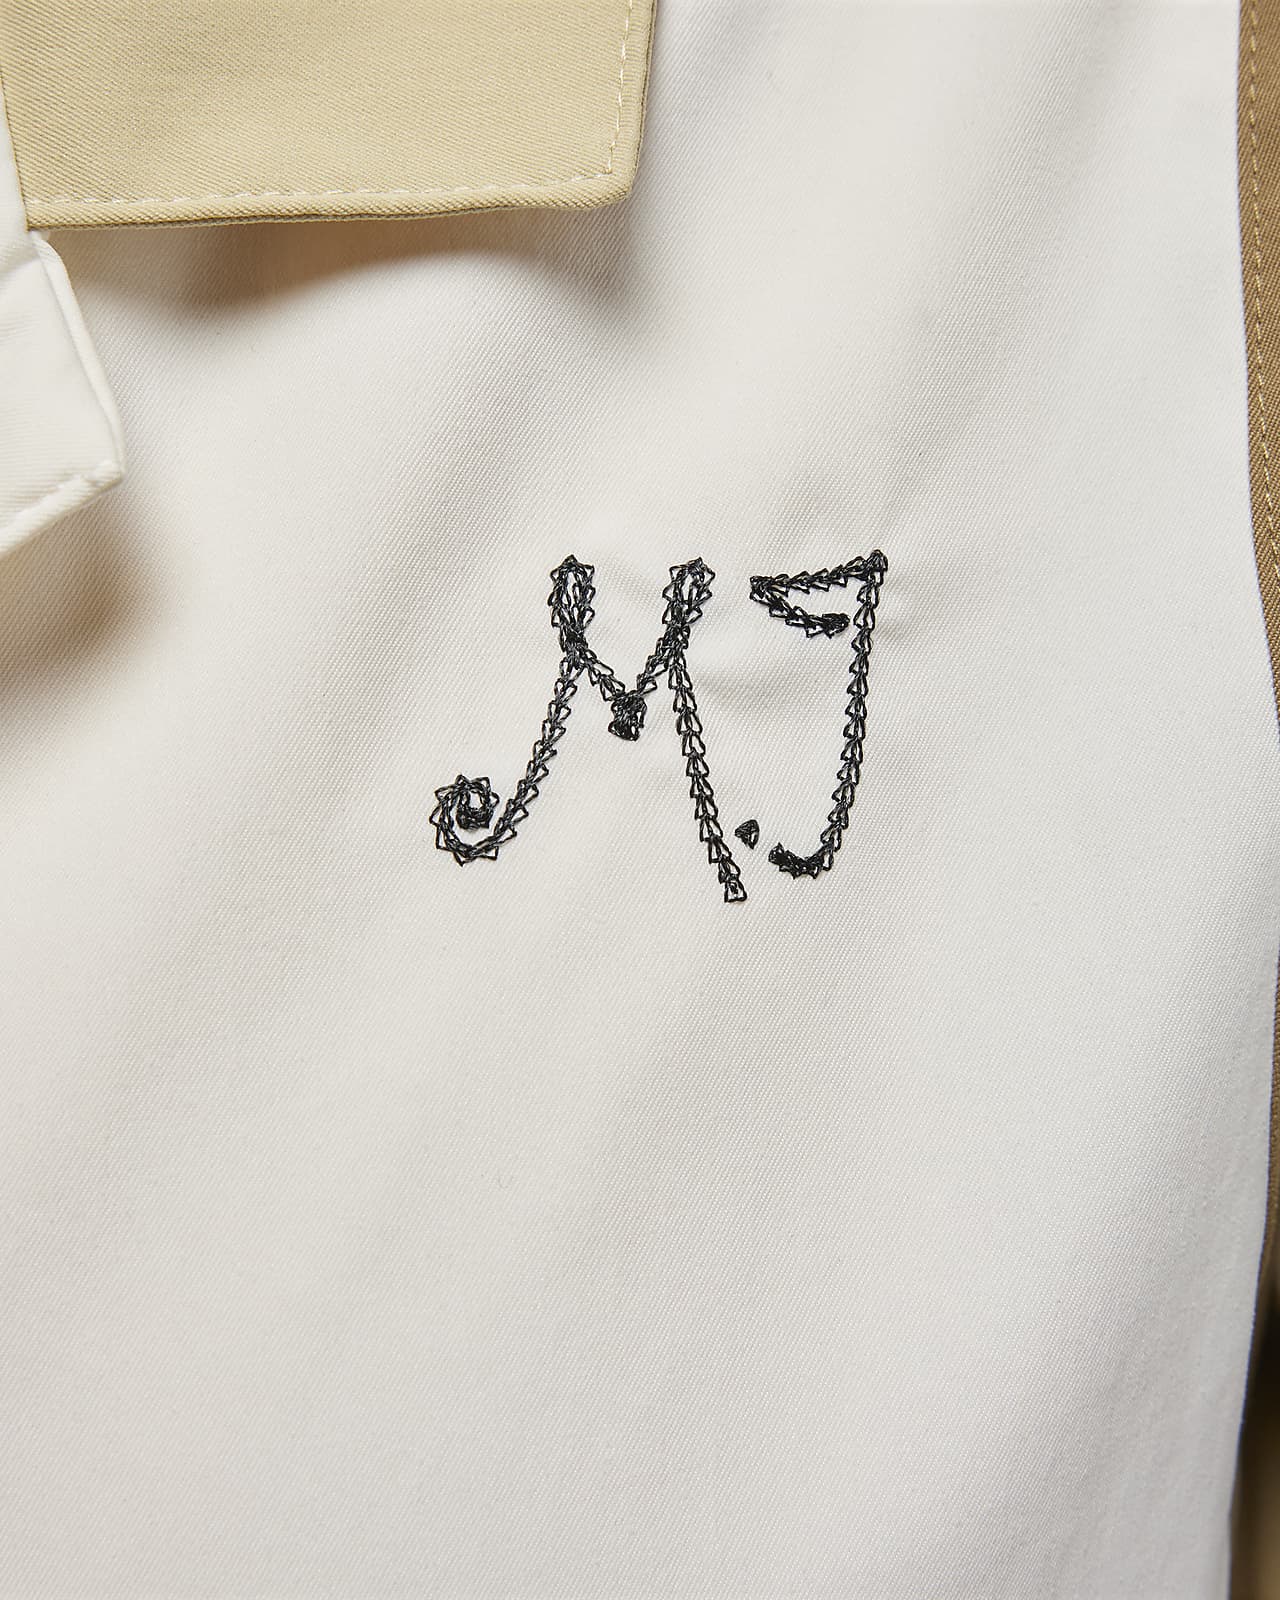 Jordan Women's Button-Down Shirt